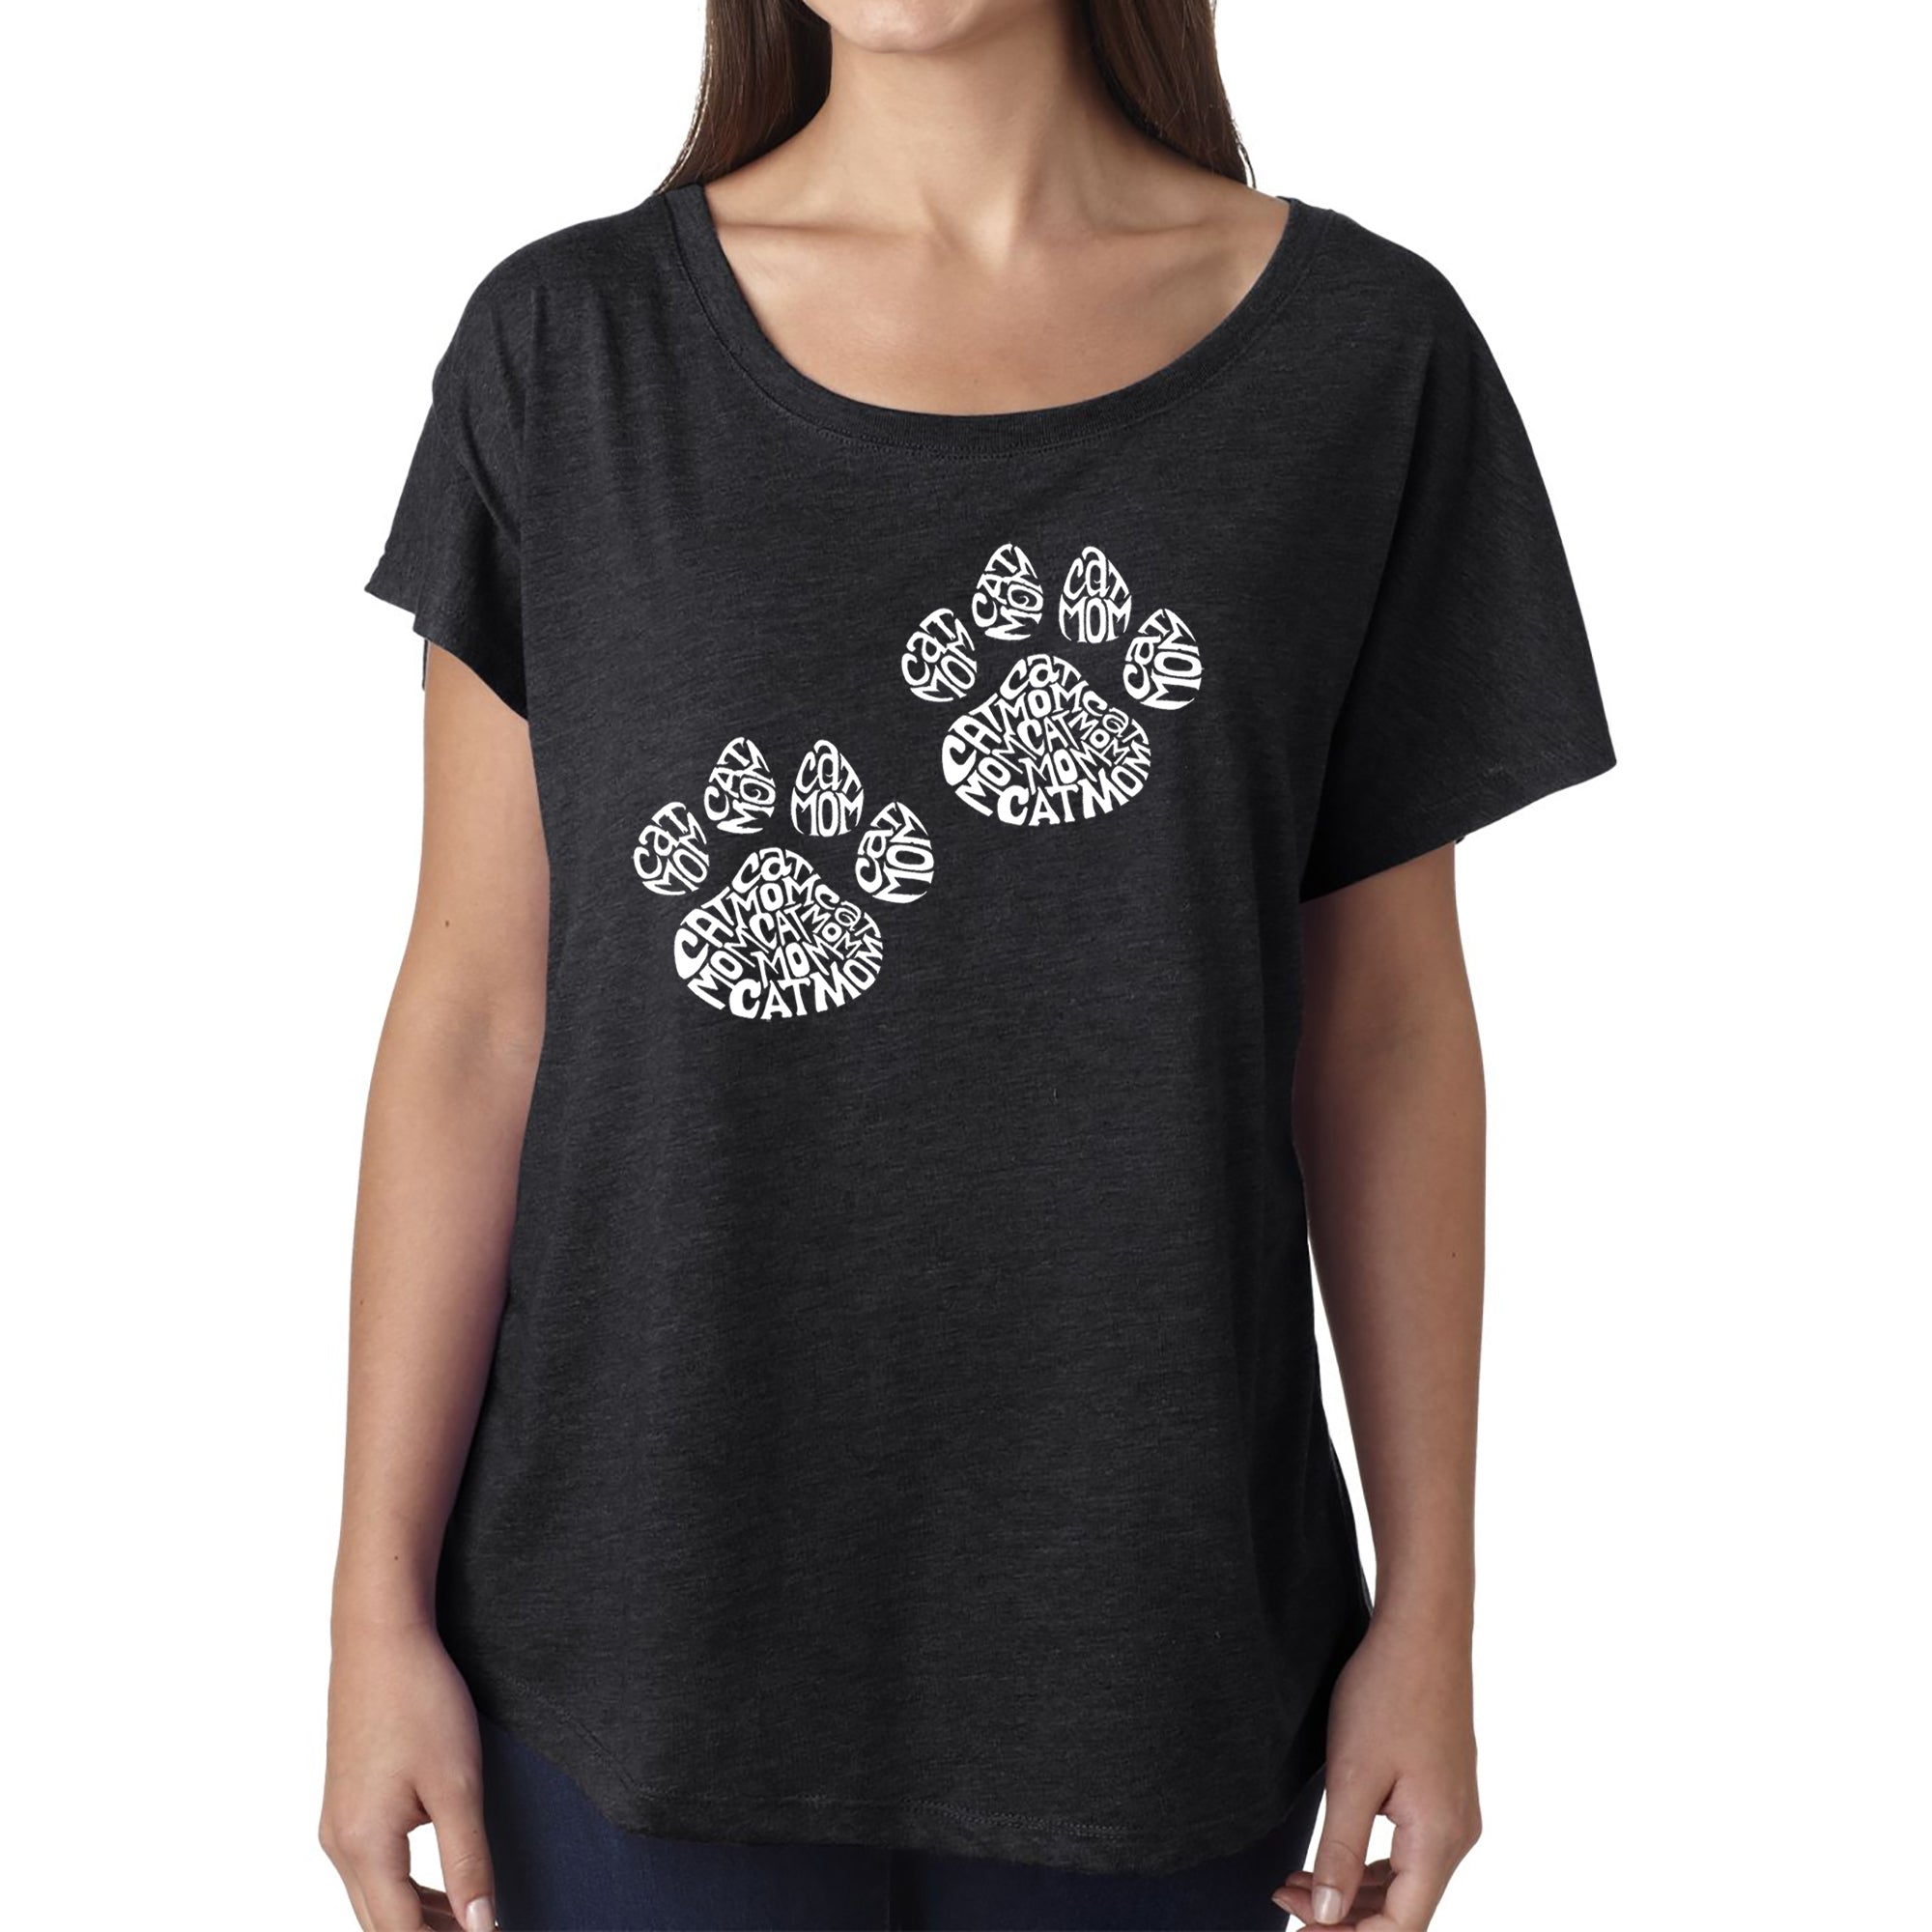 Cat Mom - Women's Loose Fit Dolman Cut Word Art Shirt - Navy - Small